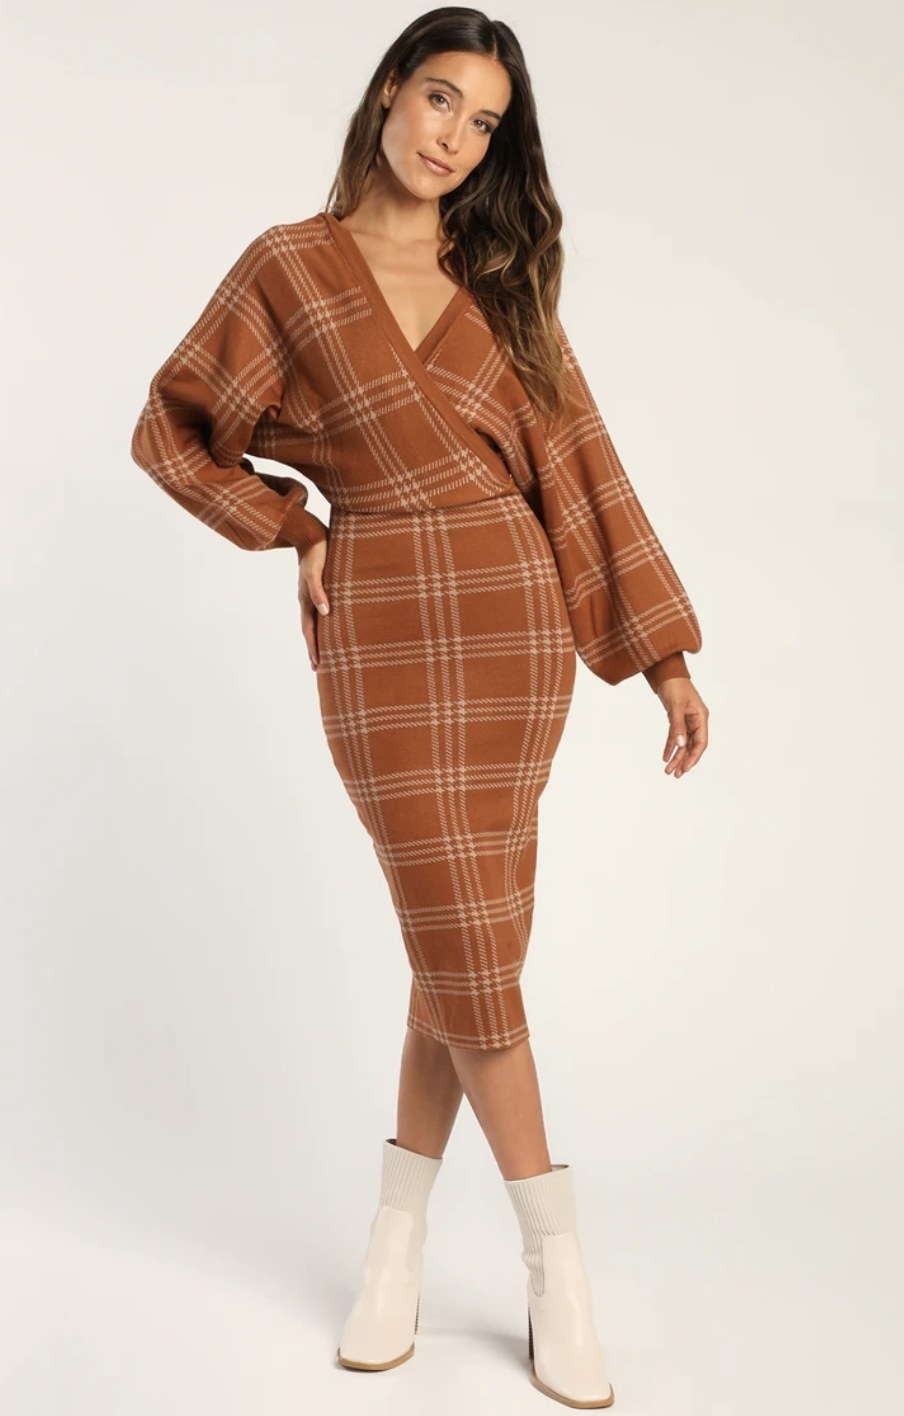 A brown plaid dress